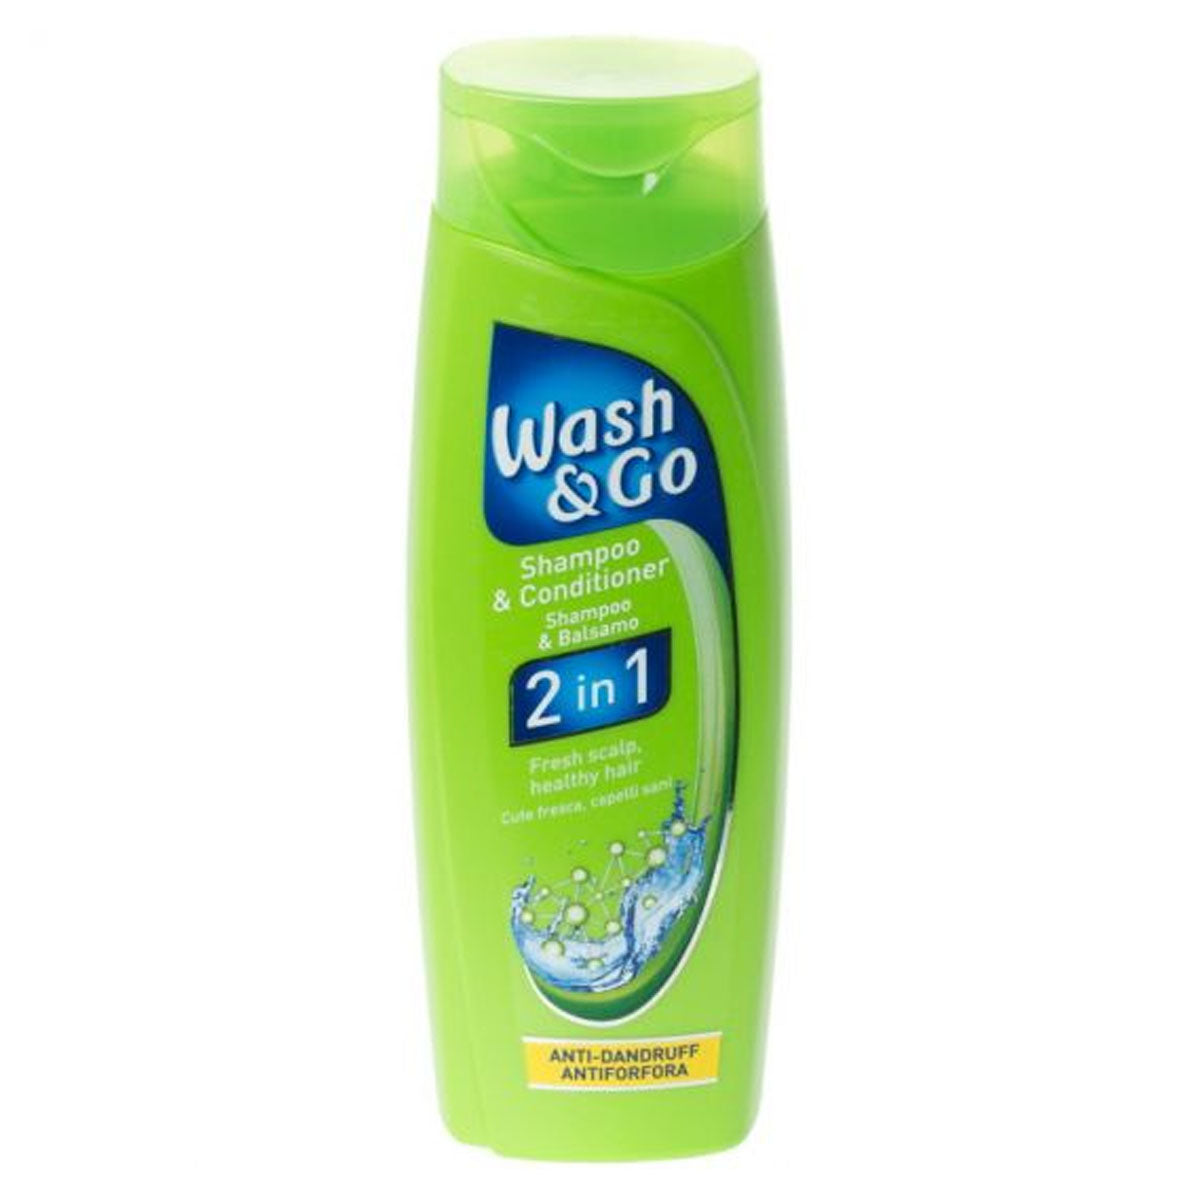 Wash & Go - 2 in 1 Shampoo and Conditioner Anti Dandruff - 200ml - Continental Food Store